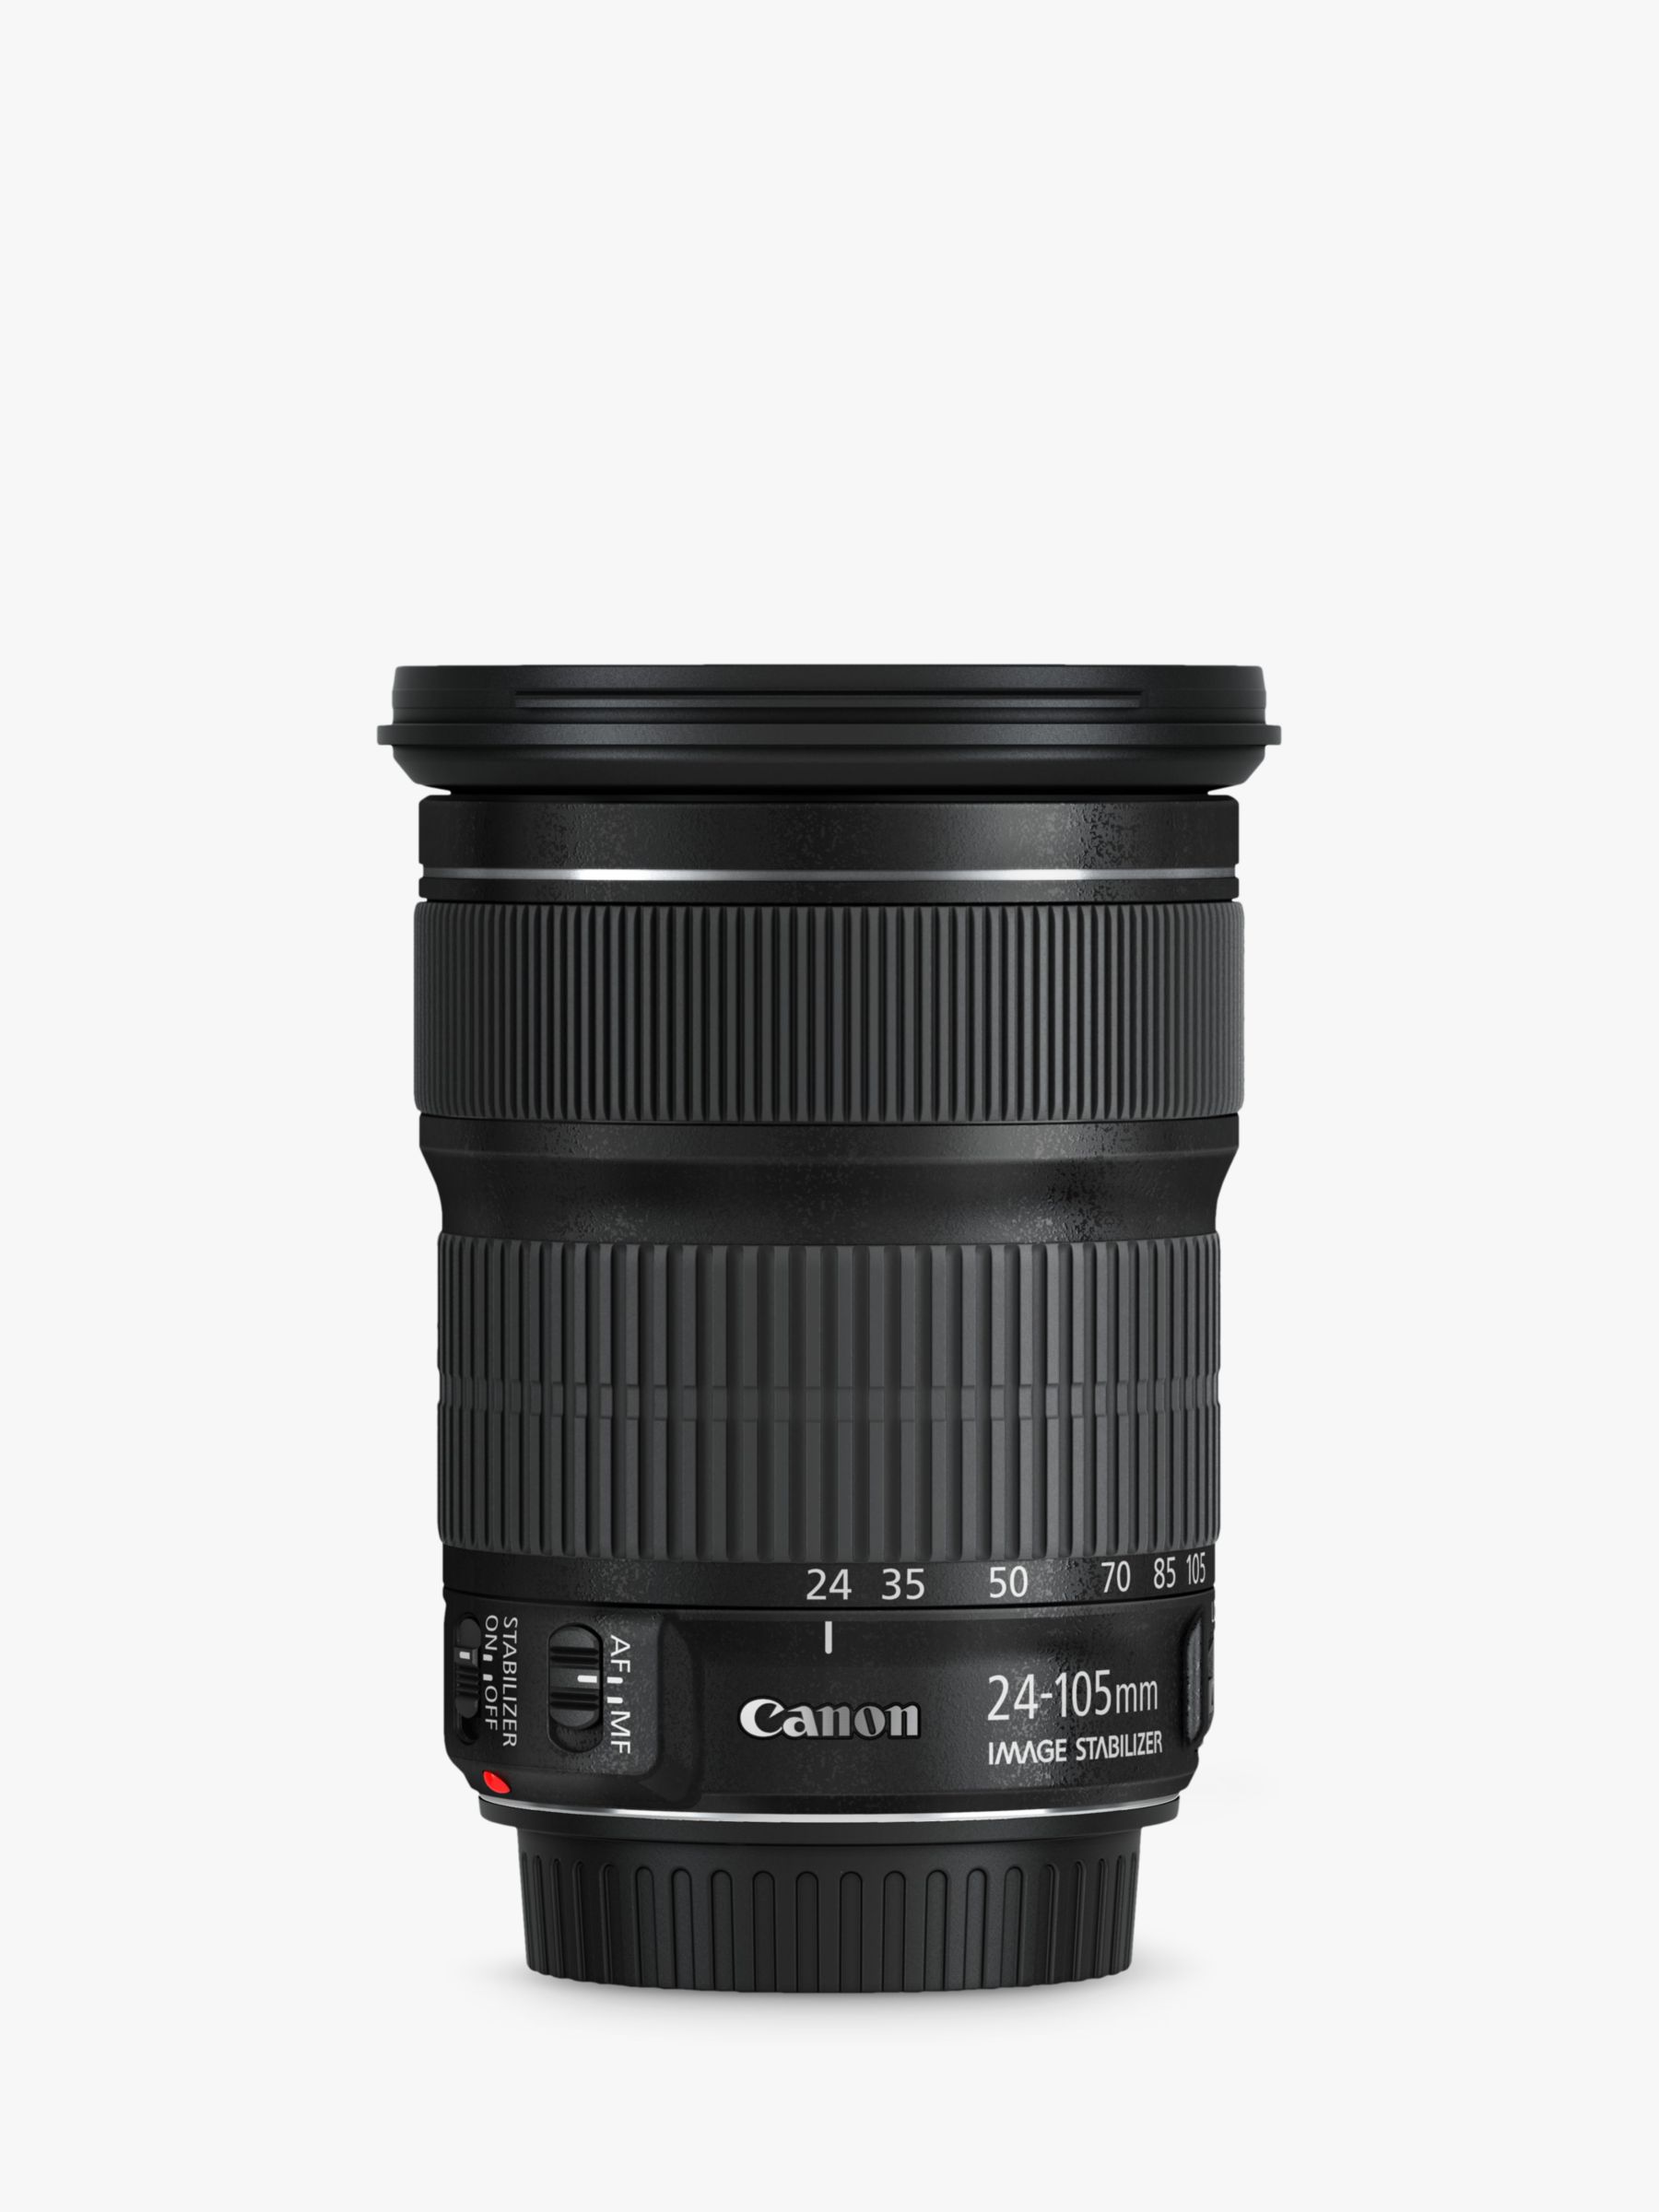 Canon Ef 24-105Mm F/3.5-5.6 Is Stm Lens